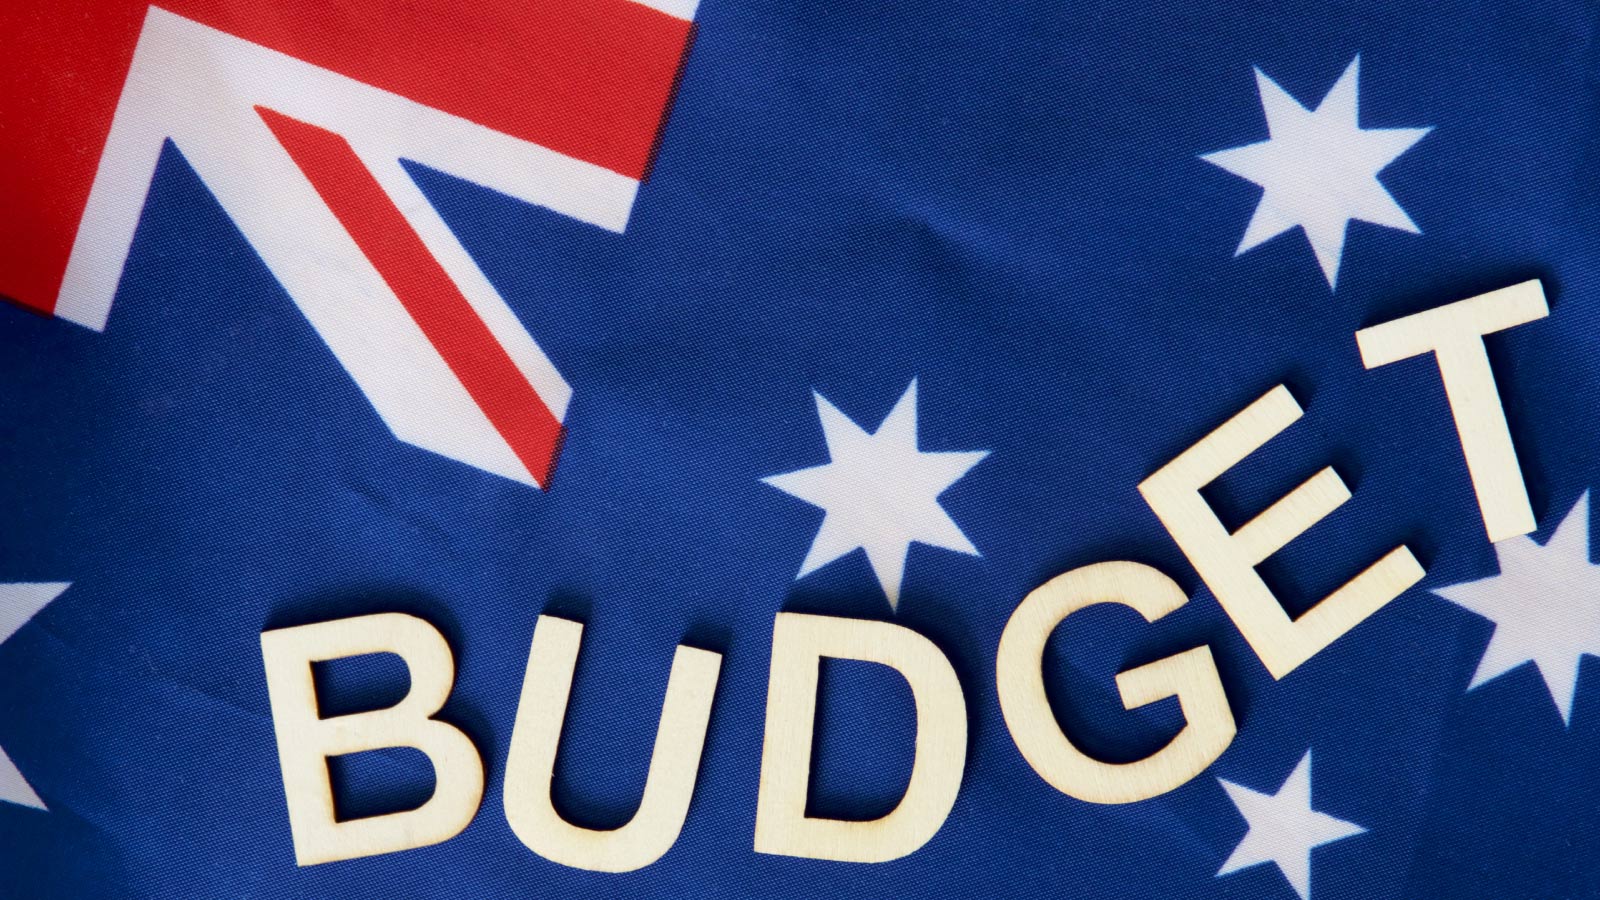 australian federal budget